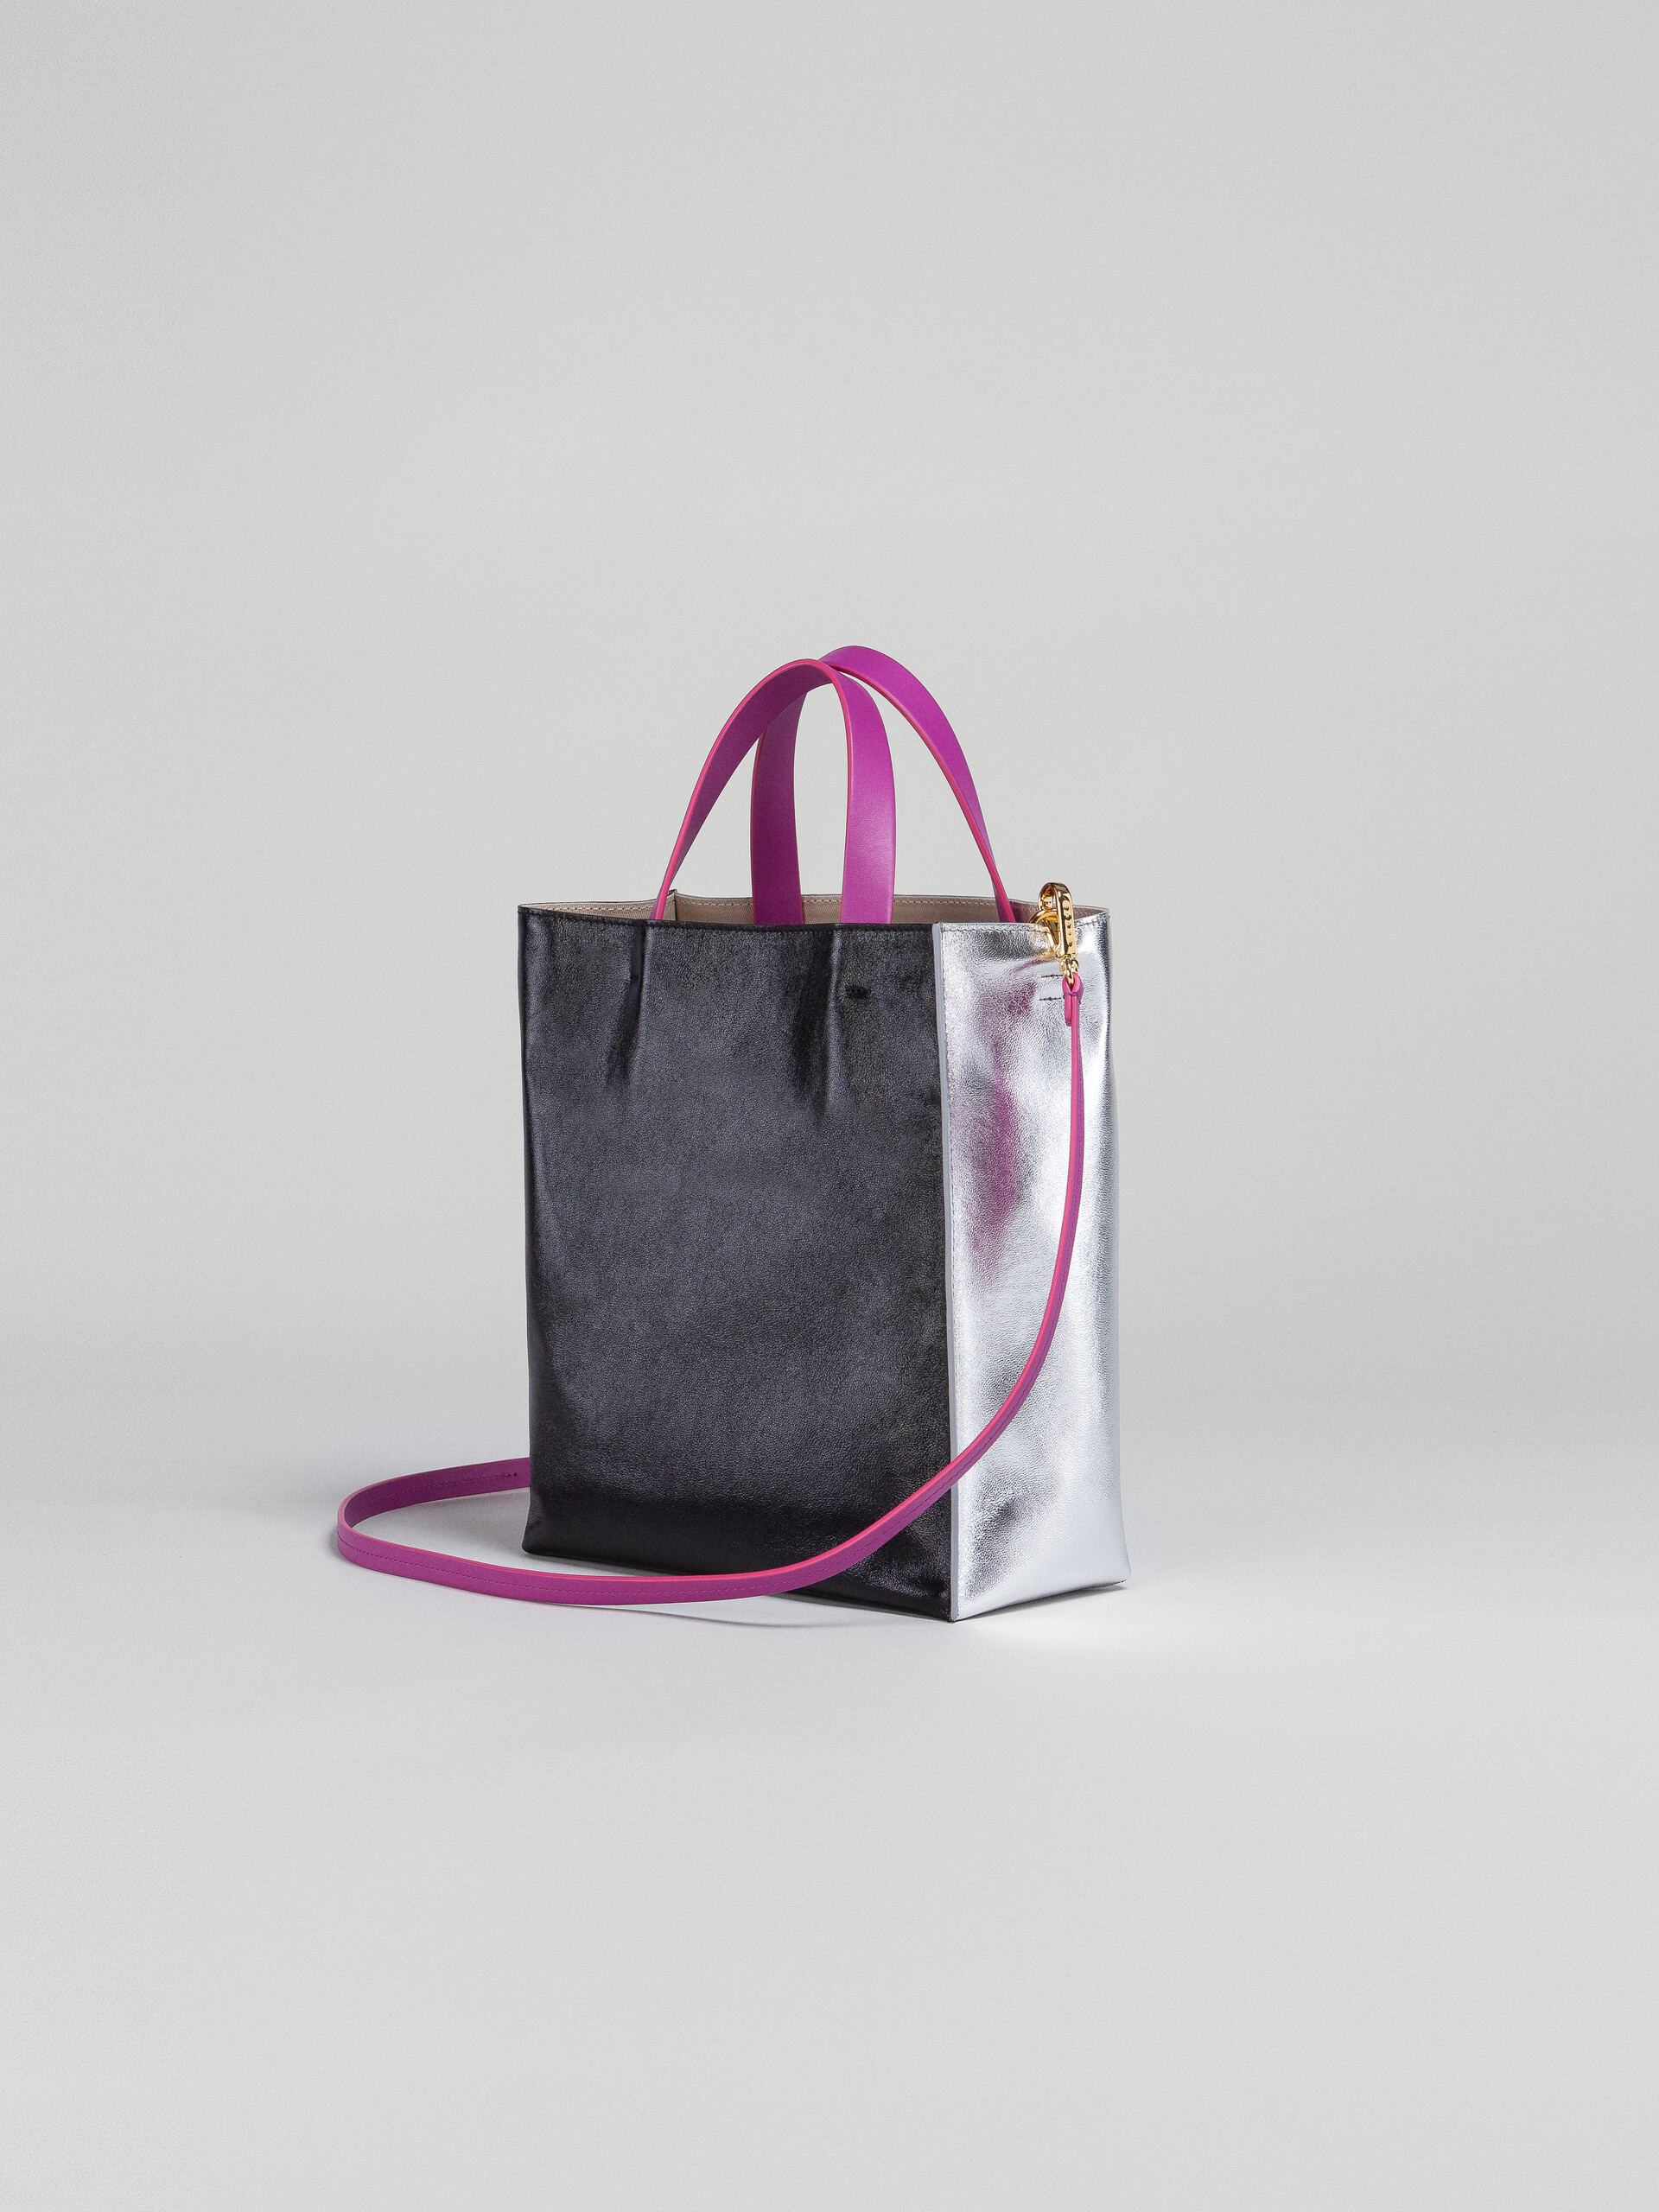 Silver black fuchsia metallic leather small MUSEO SOFT bag - Shopping Bags - Image 2